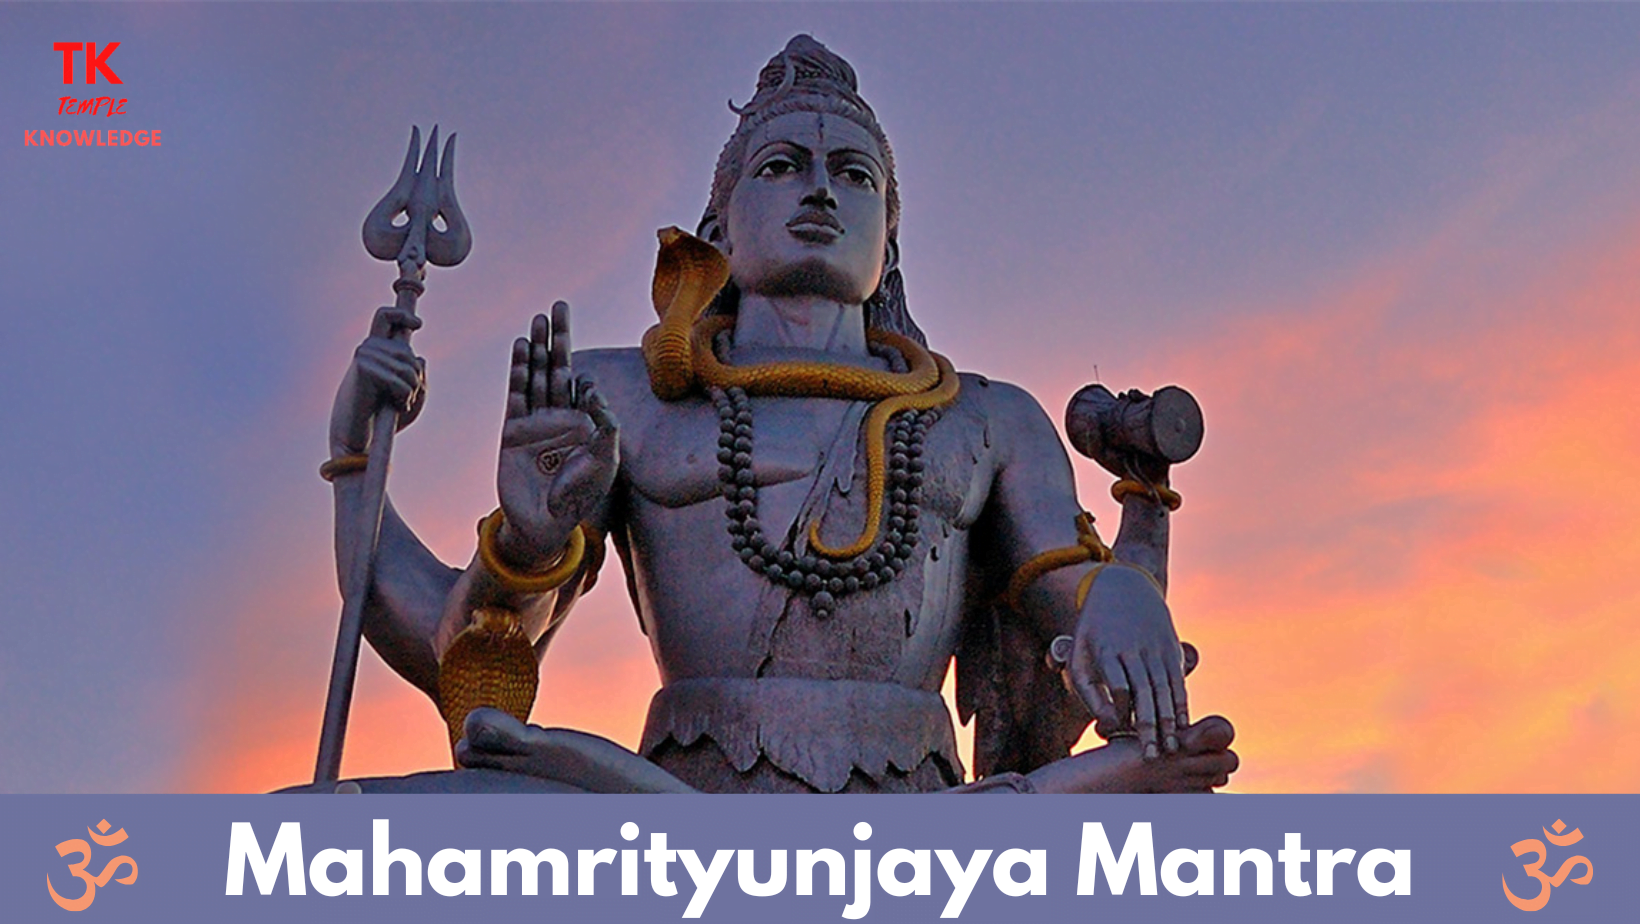 Mahamrityunjaya Mantra - TEMPLE KNOWLEDGE